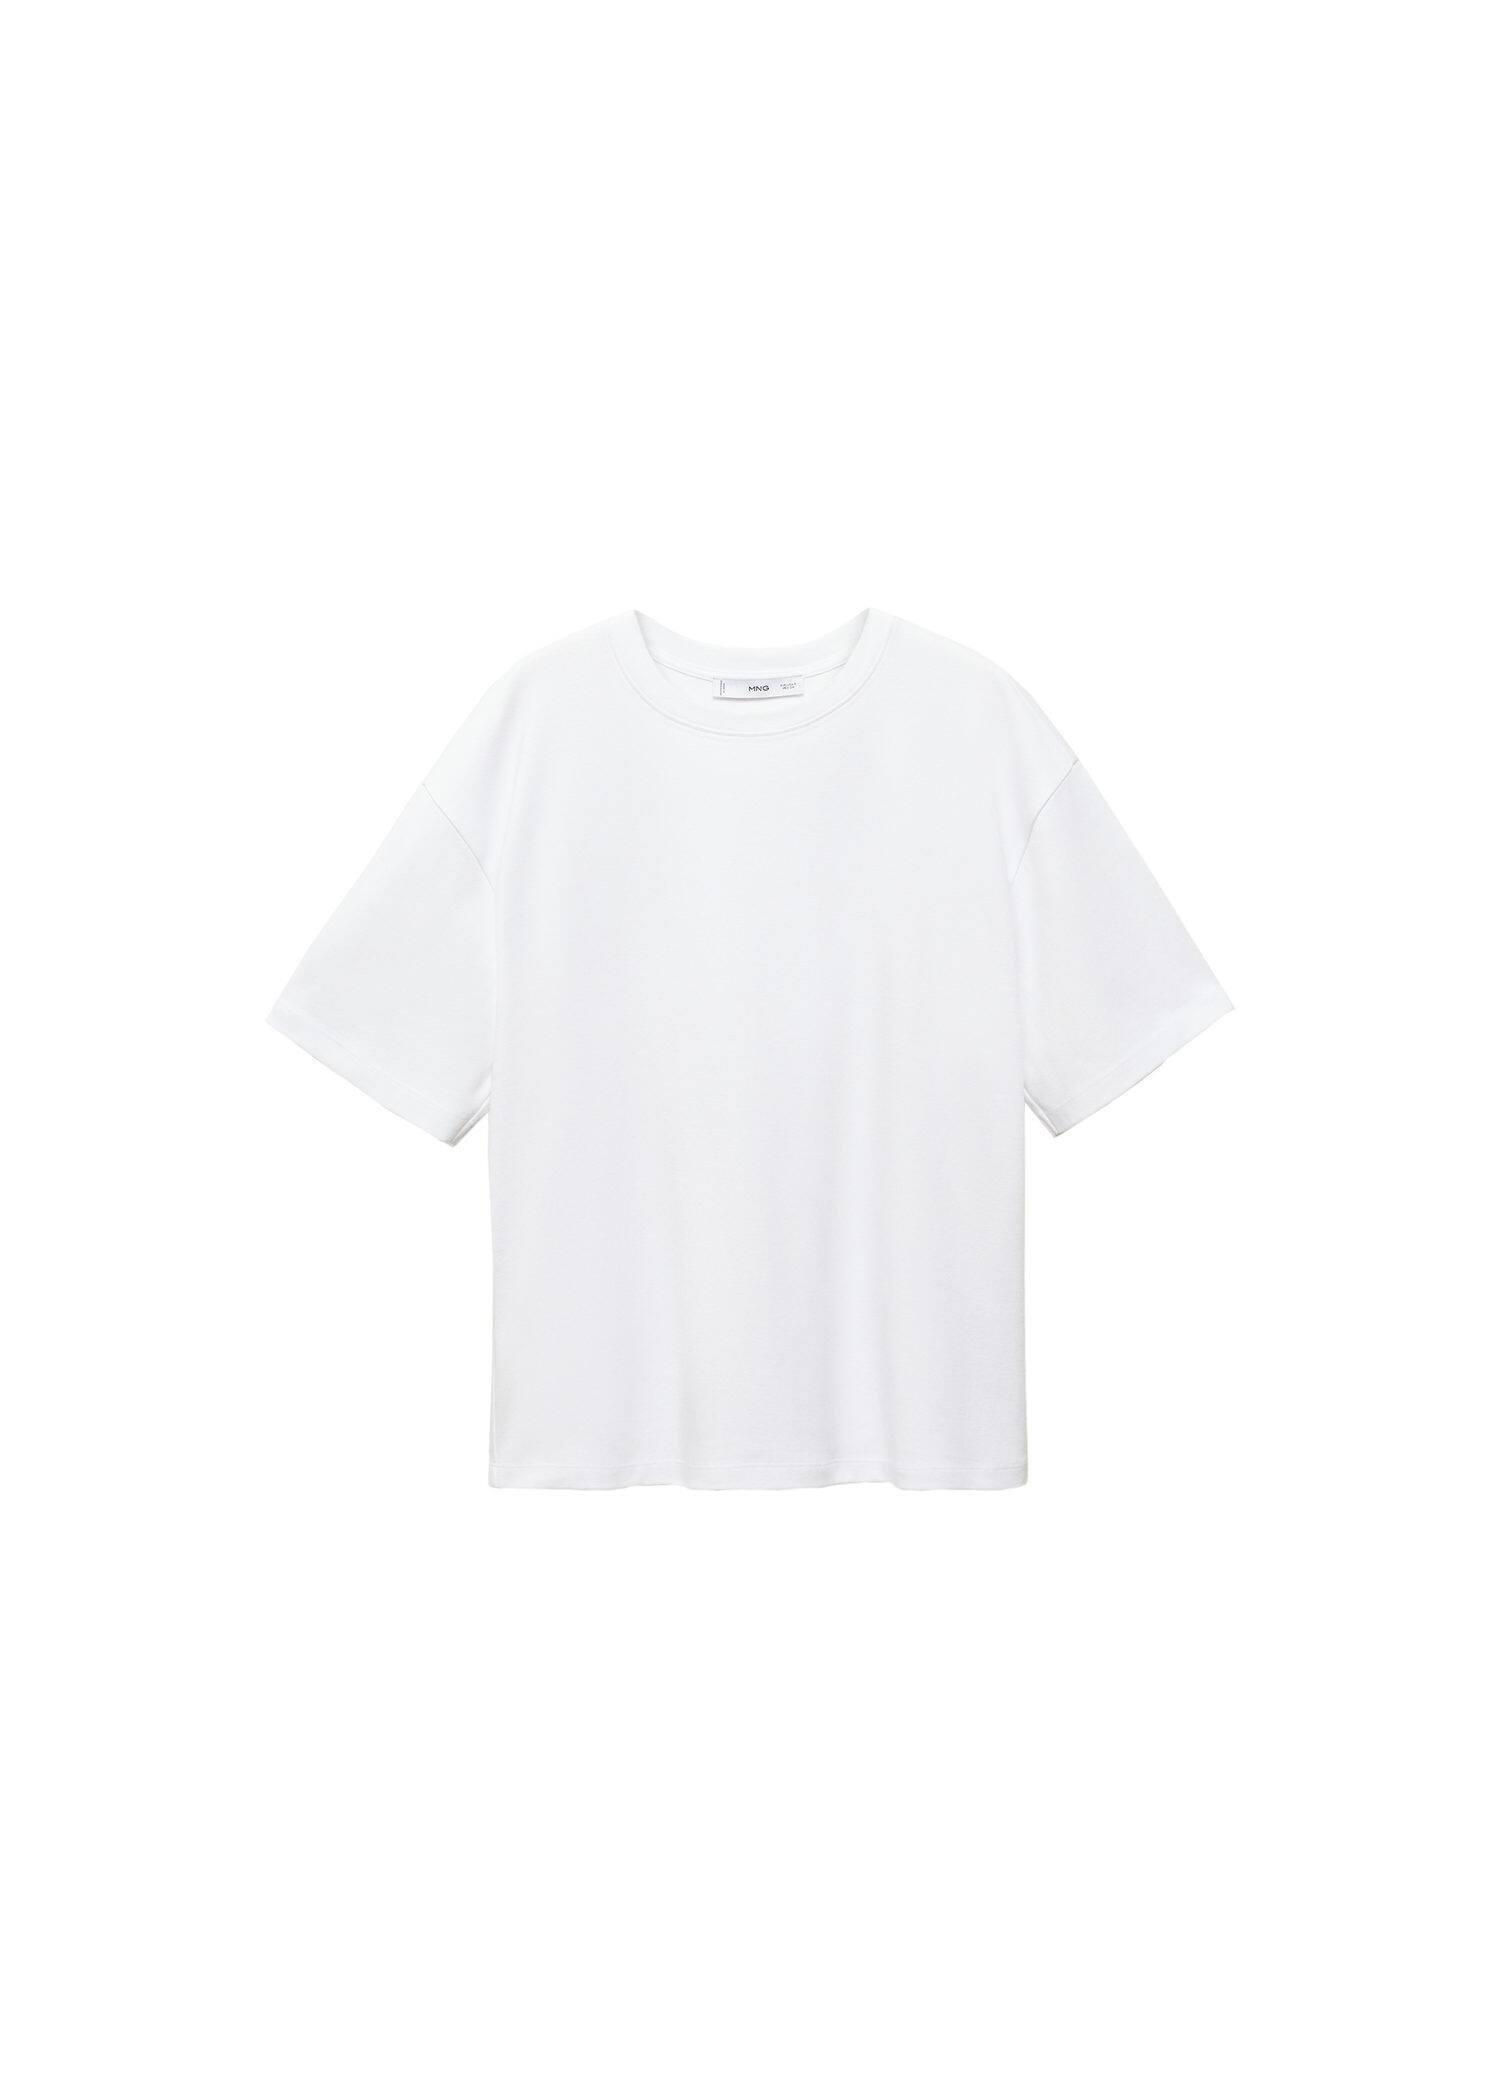 Mango - White Oversize Cotton T-Shirt